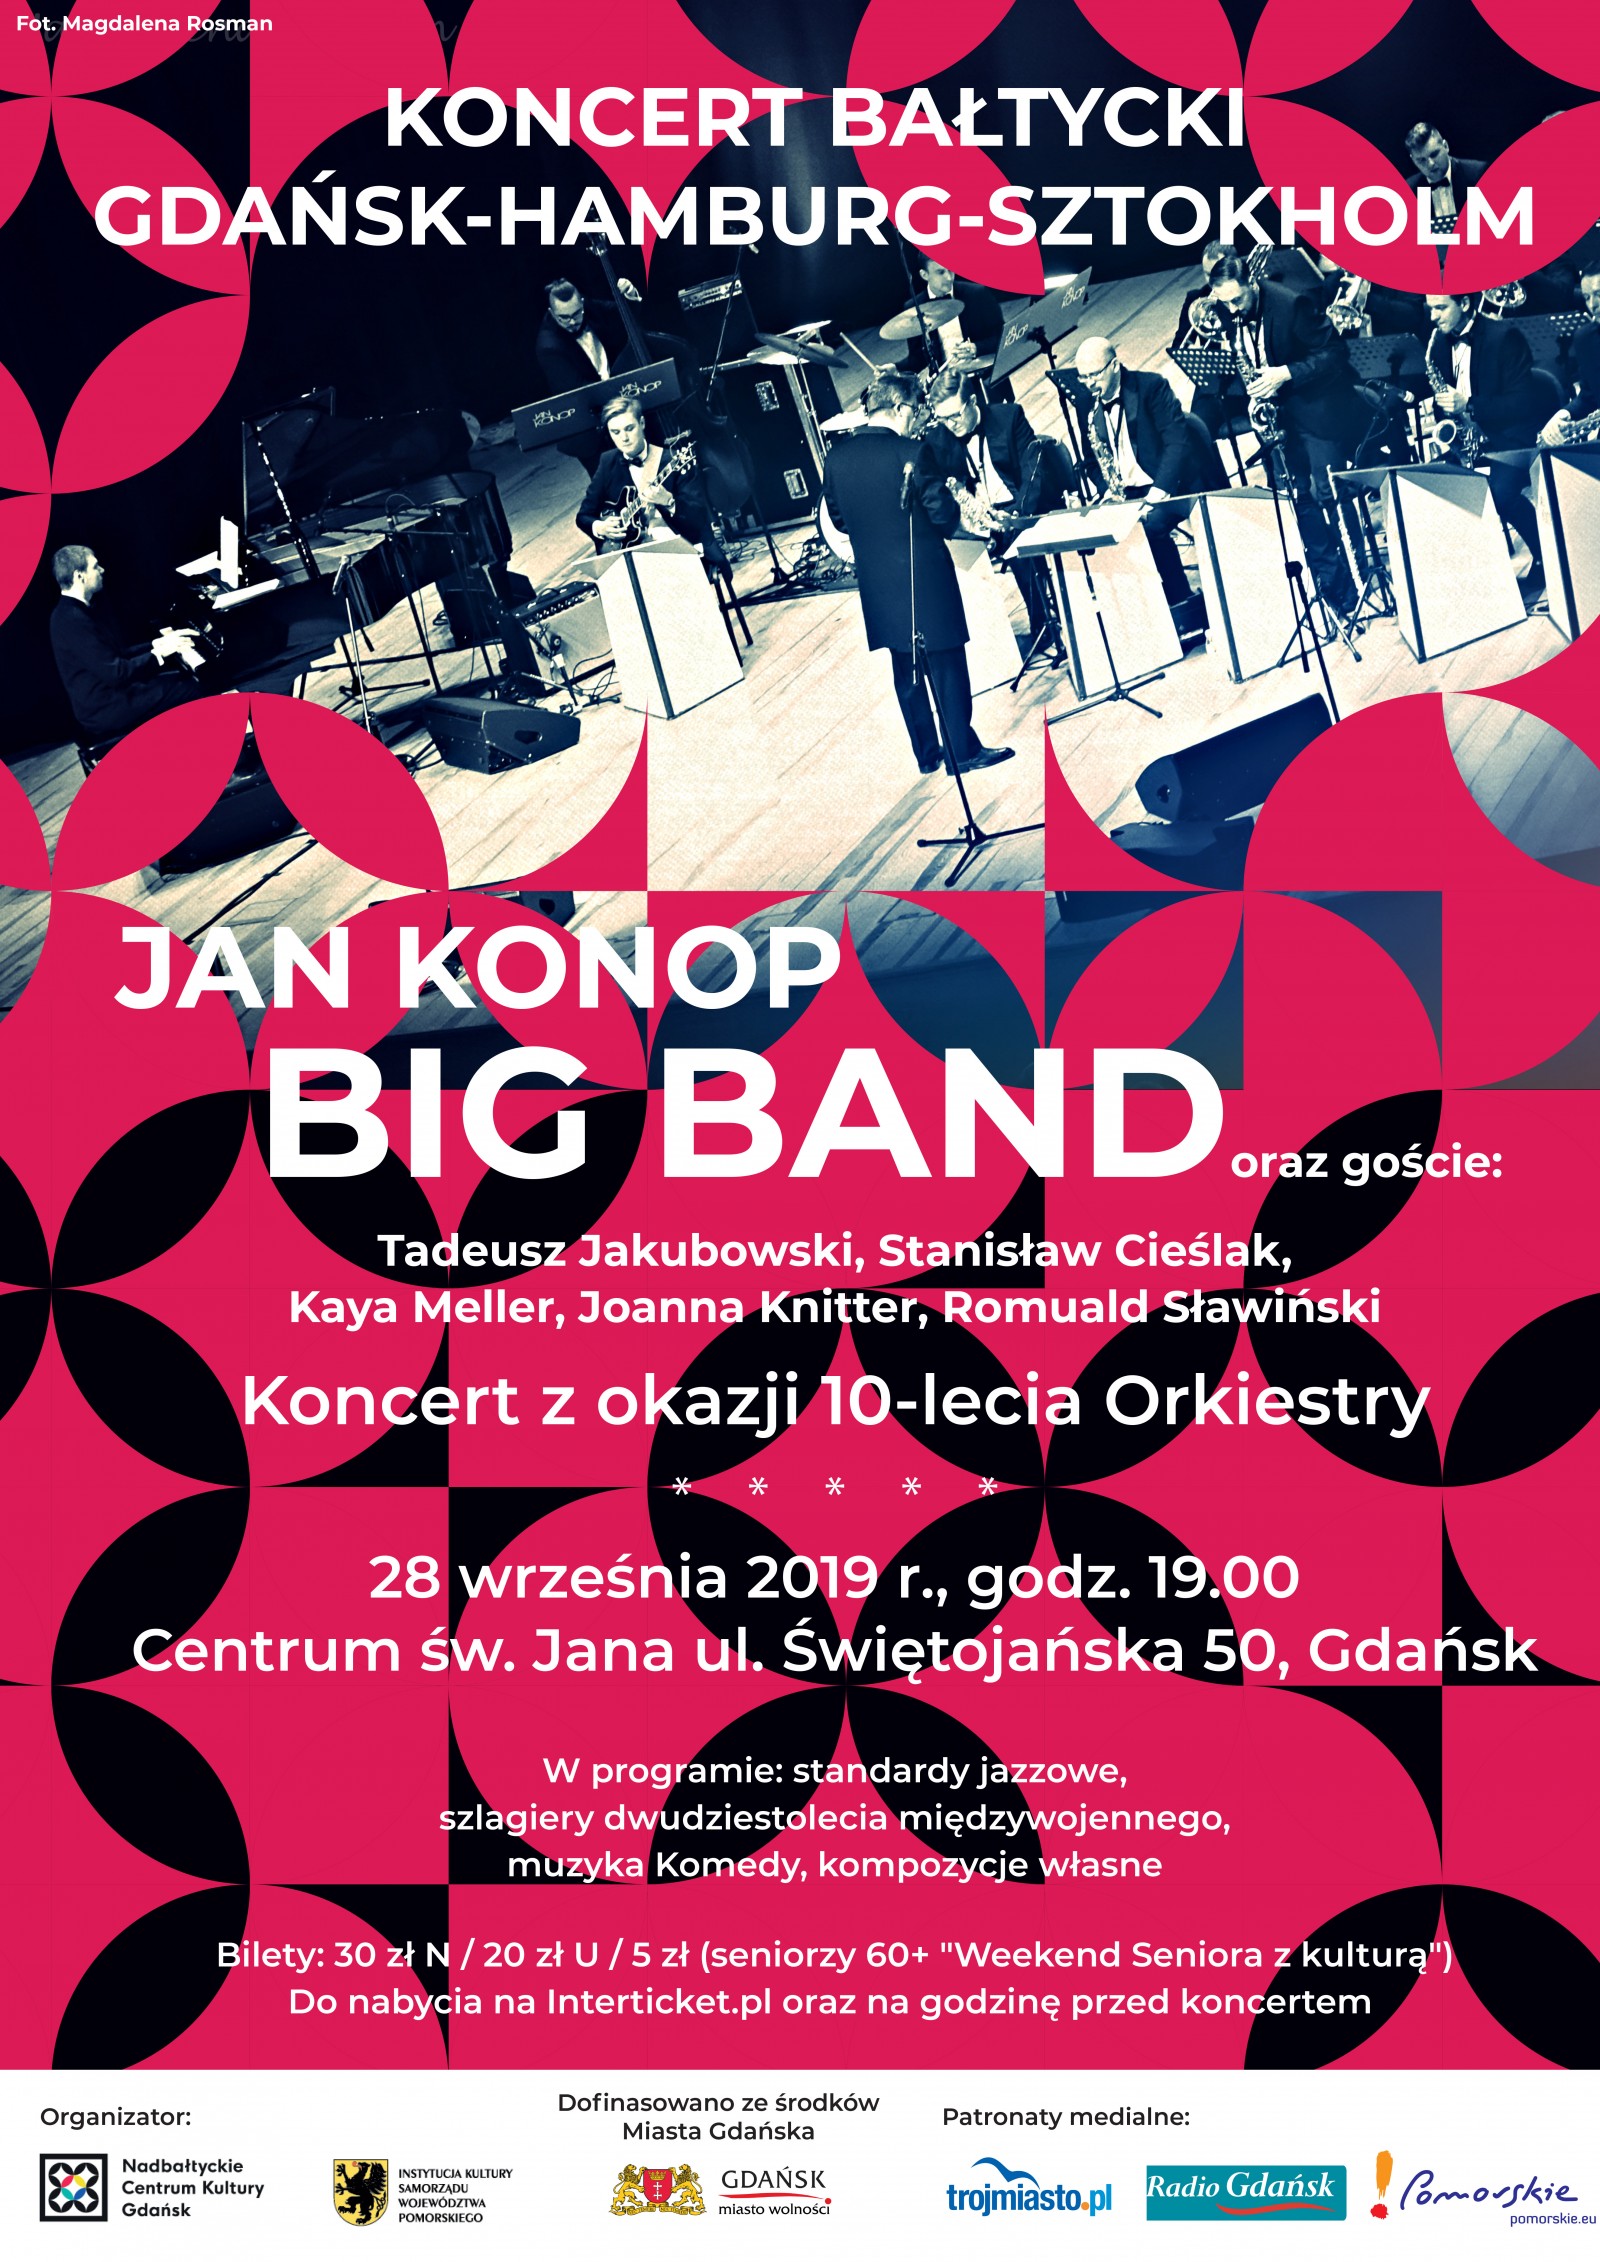 Jan Konop Big Band